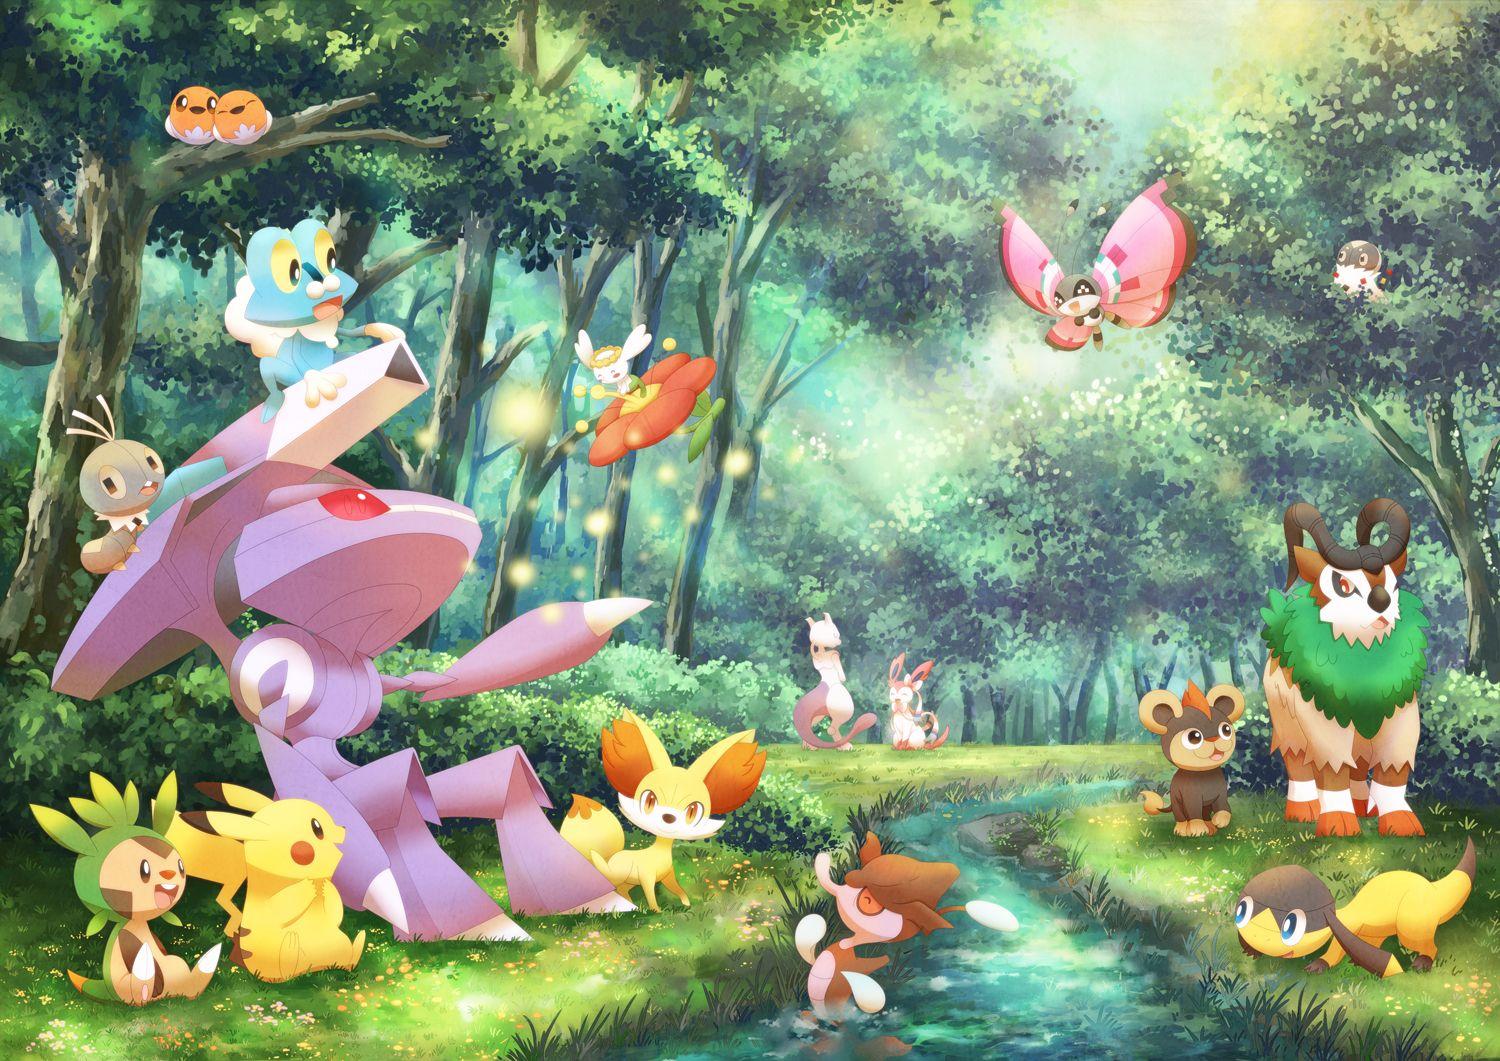 pokemon genesect and the legend awakened wallpaper